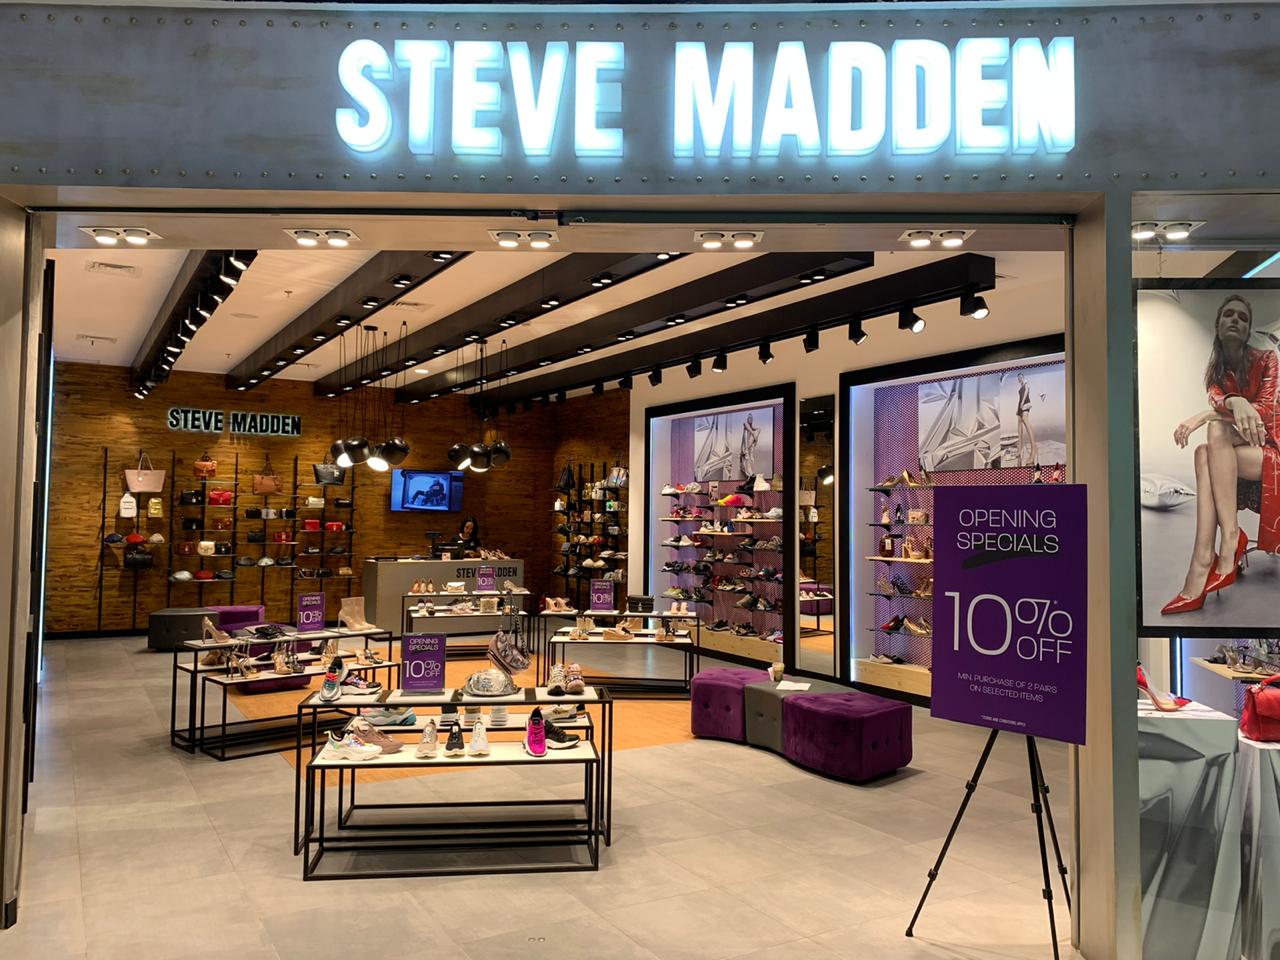 Steve Madden shop front in lippo mall puri st. moritz